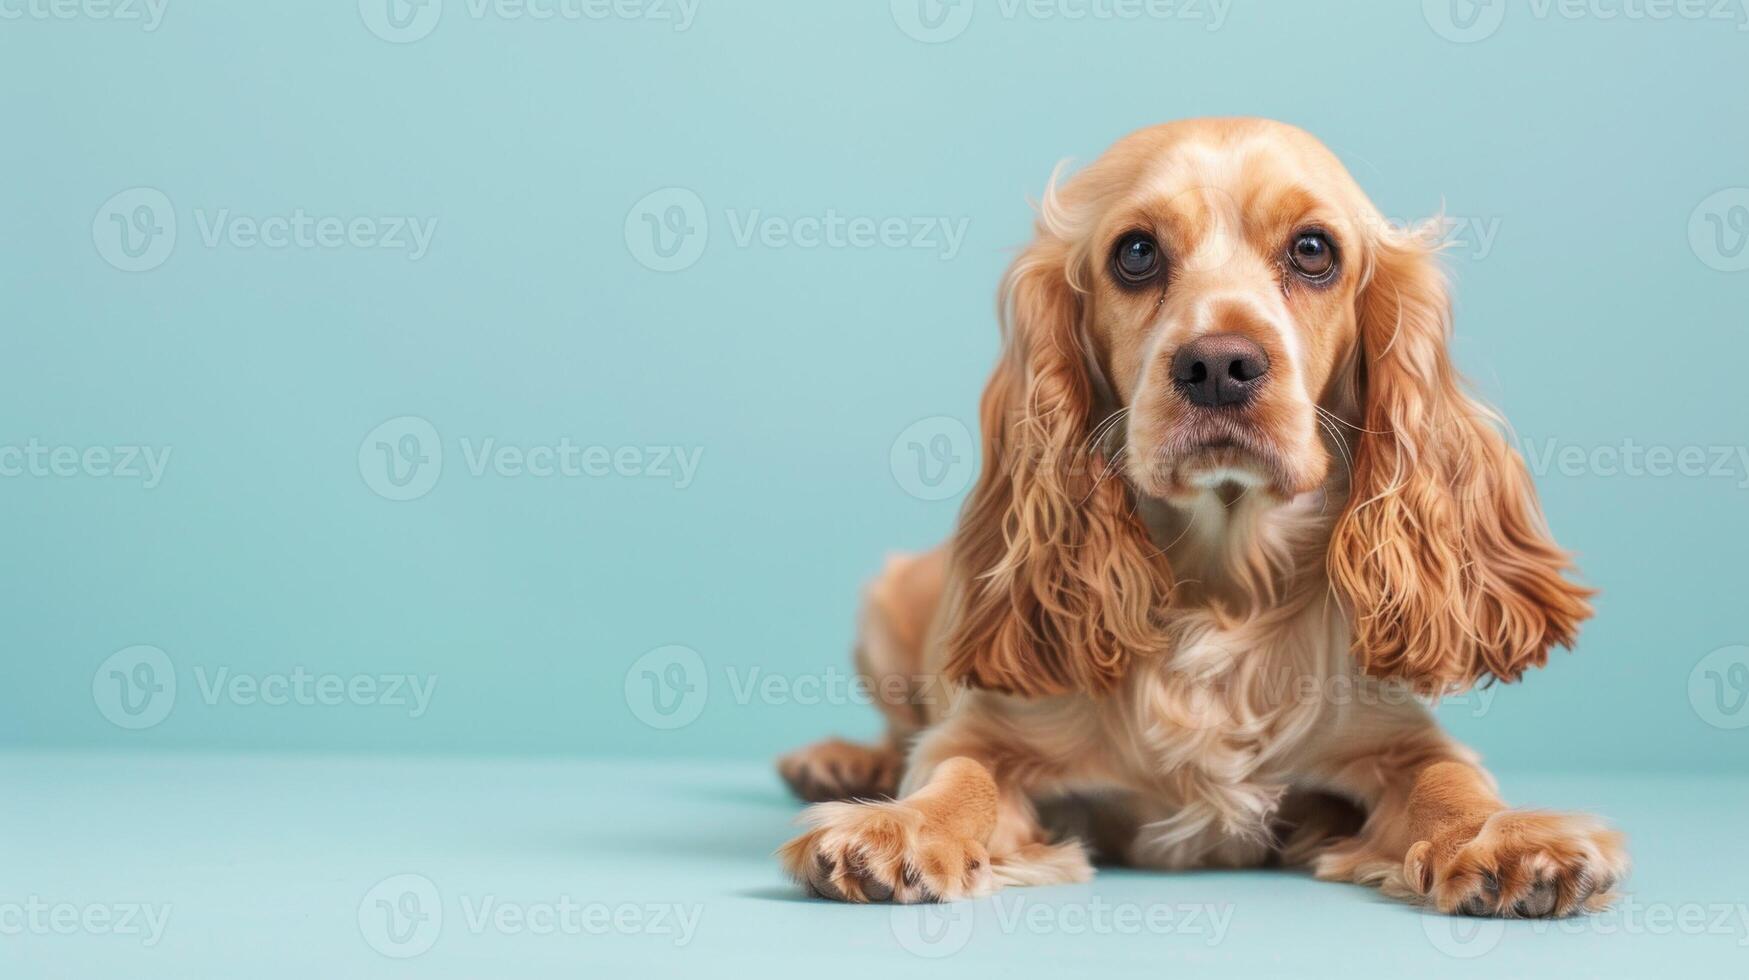 Cocker Spaniel dog portrait showcasing adorable pet with cute animal features photo